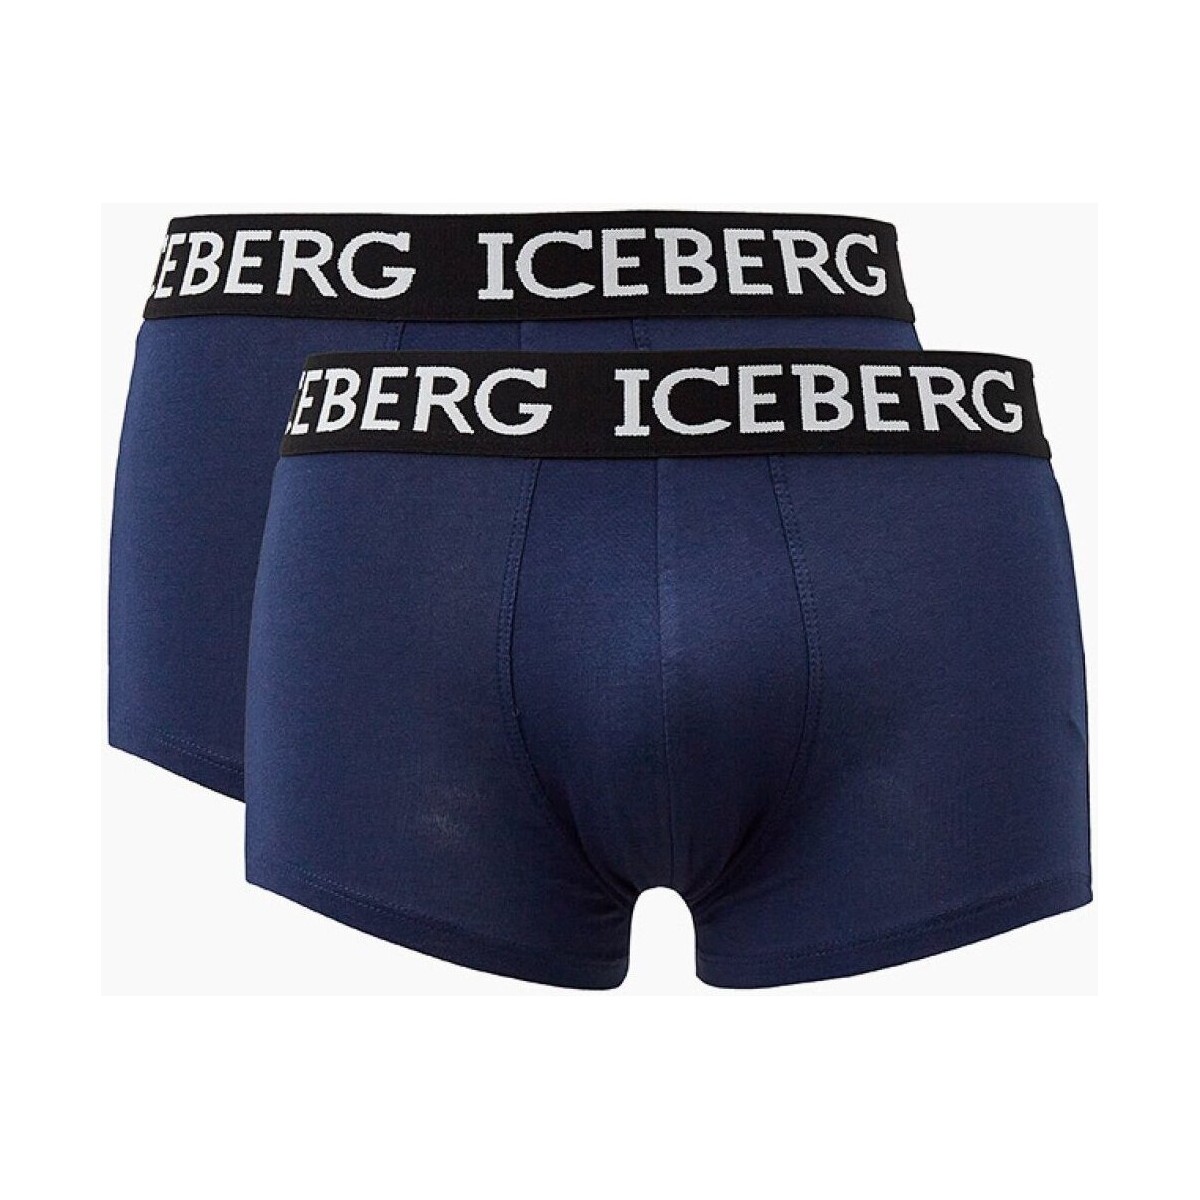 Bielizna Męskie Bokserki Iceberg ICE1UTR02 Niebieski